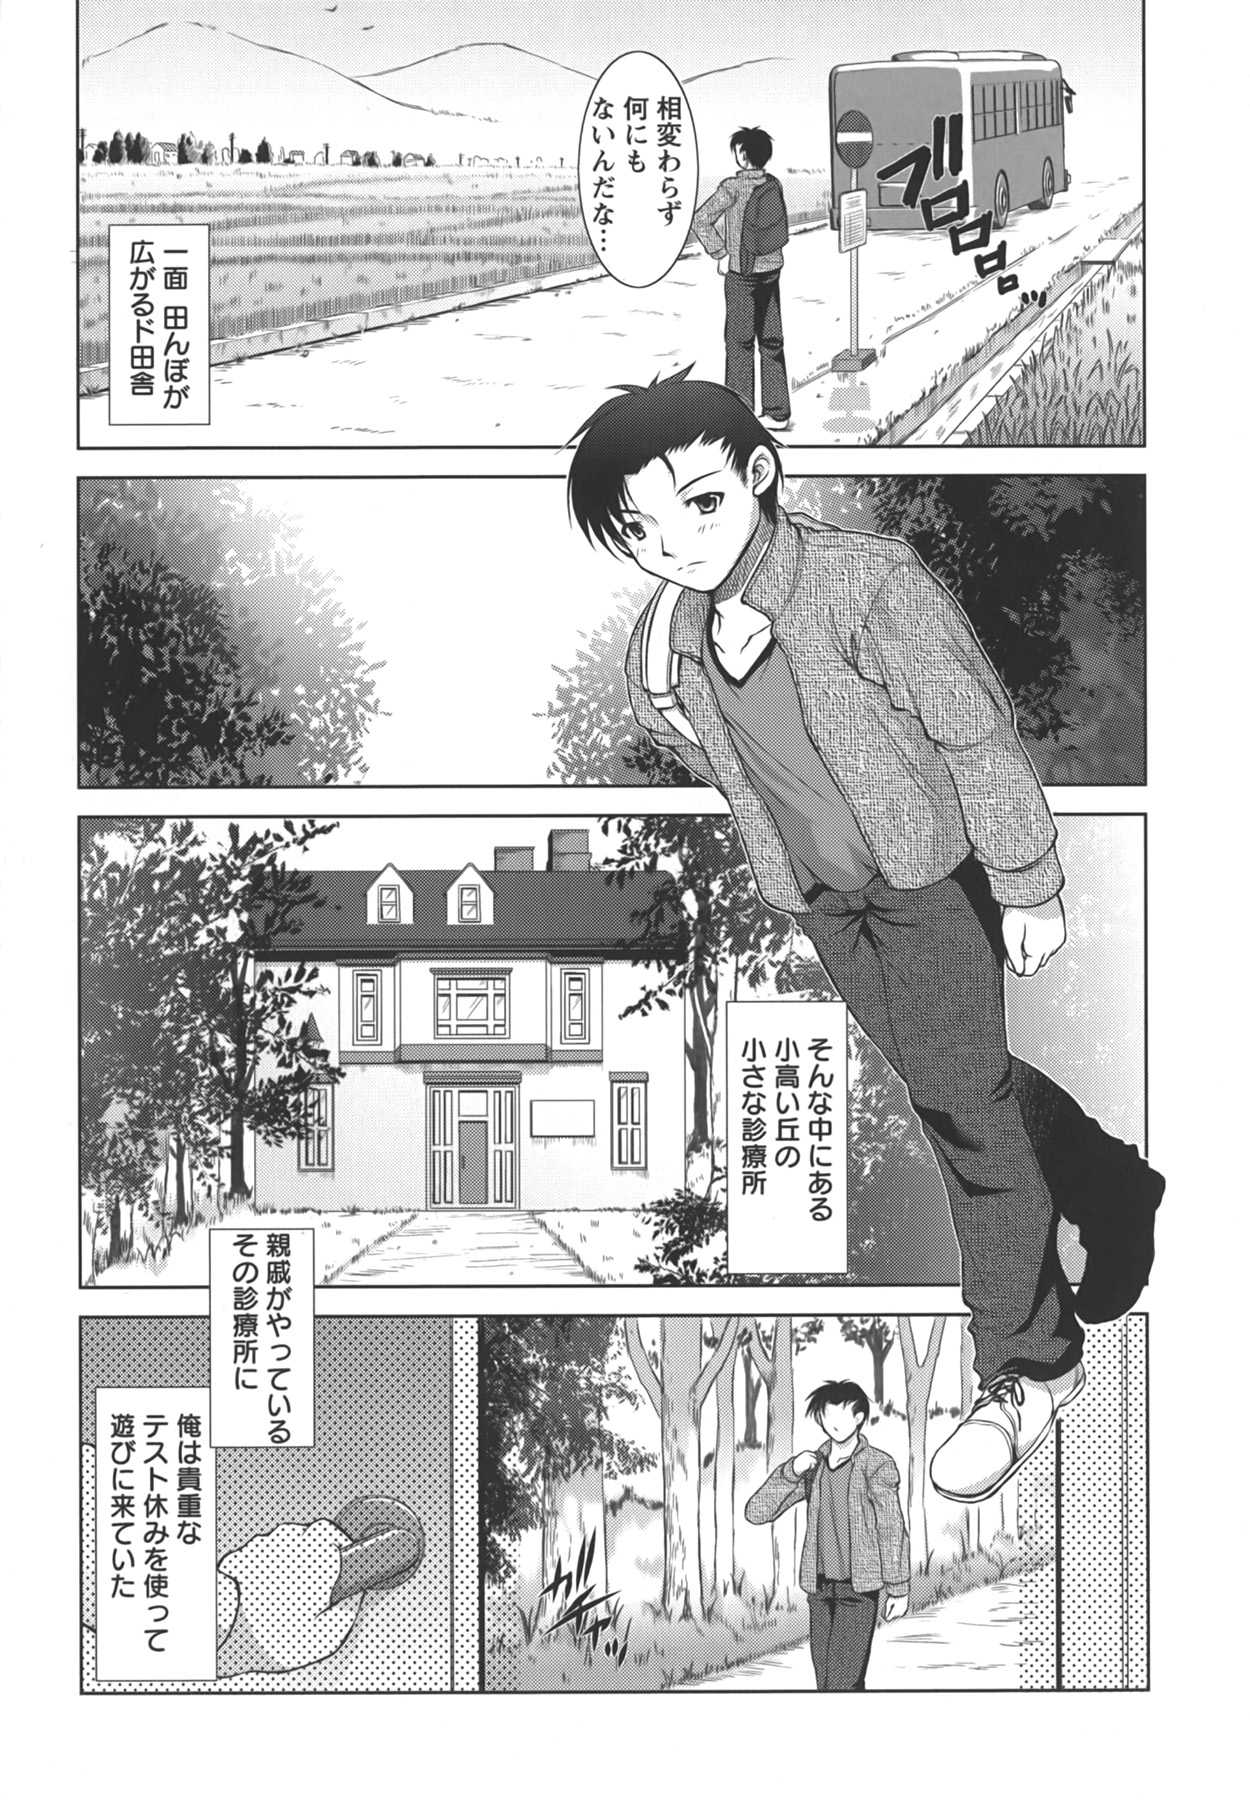 [Takane no Hana] Shinmai Shatakuduma [Another Scan] (成年コミック) [たかねのはな] 新米社宅妻 [2009-12-17] (別スキャン)